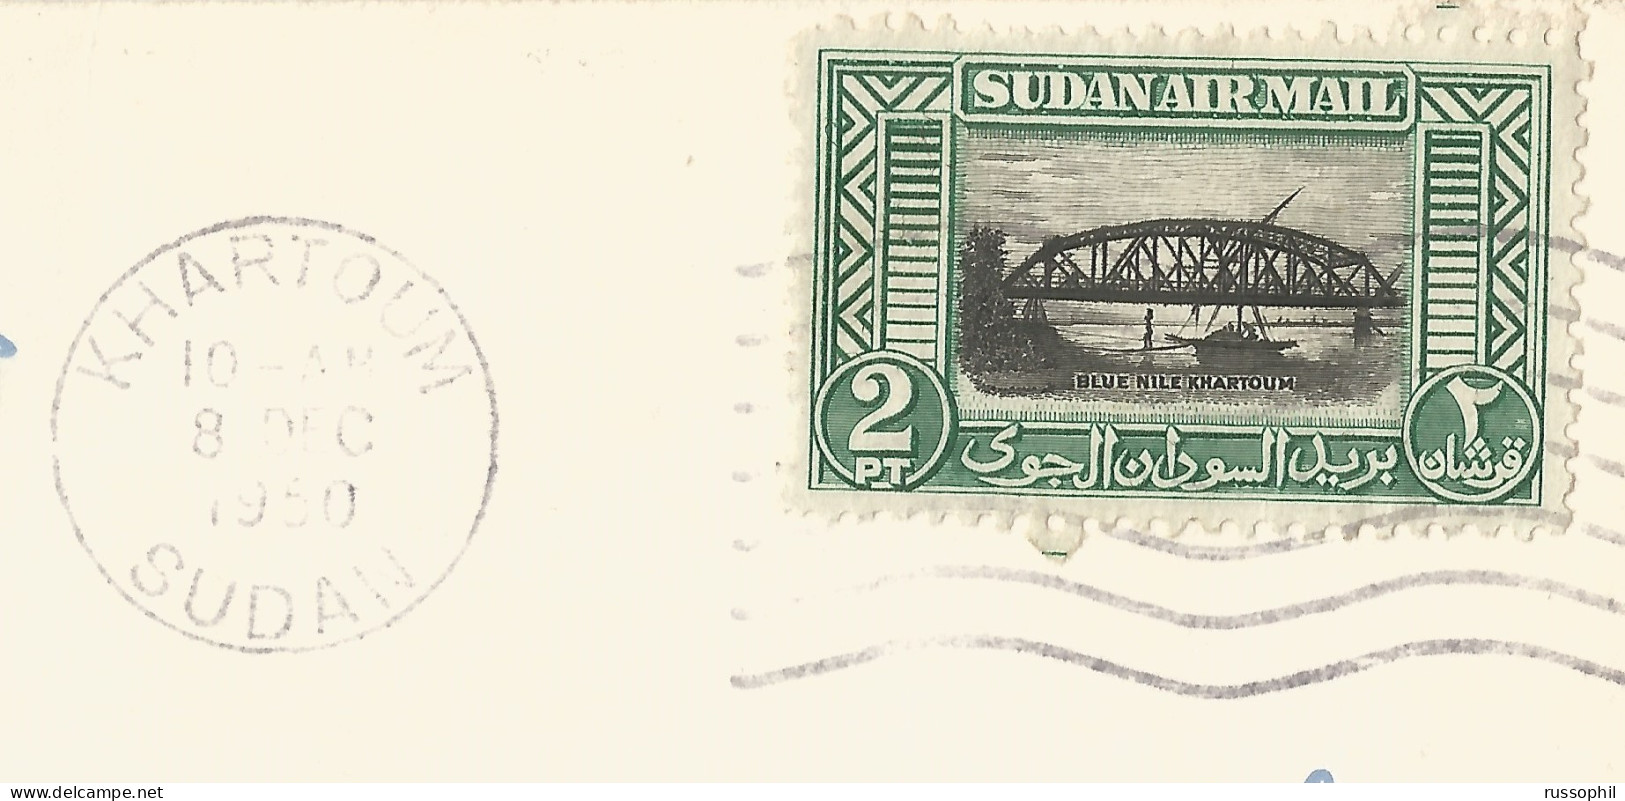 SUDAN - 2 PIA. AIR MAIL FRANKING ON PC (TUT ANKH AMON'S TREASURES) TO BELGIUM - 1950 - Soedan (...-1951)